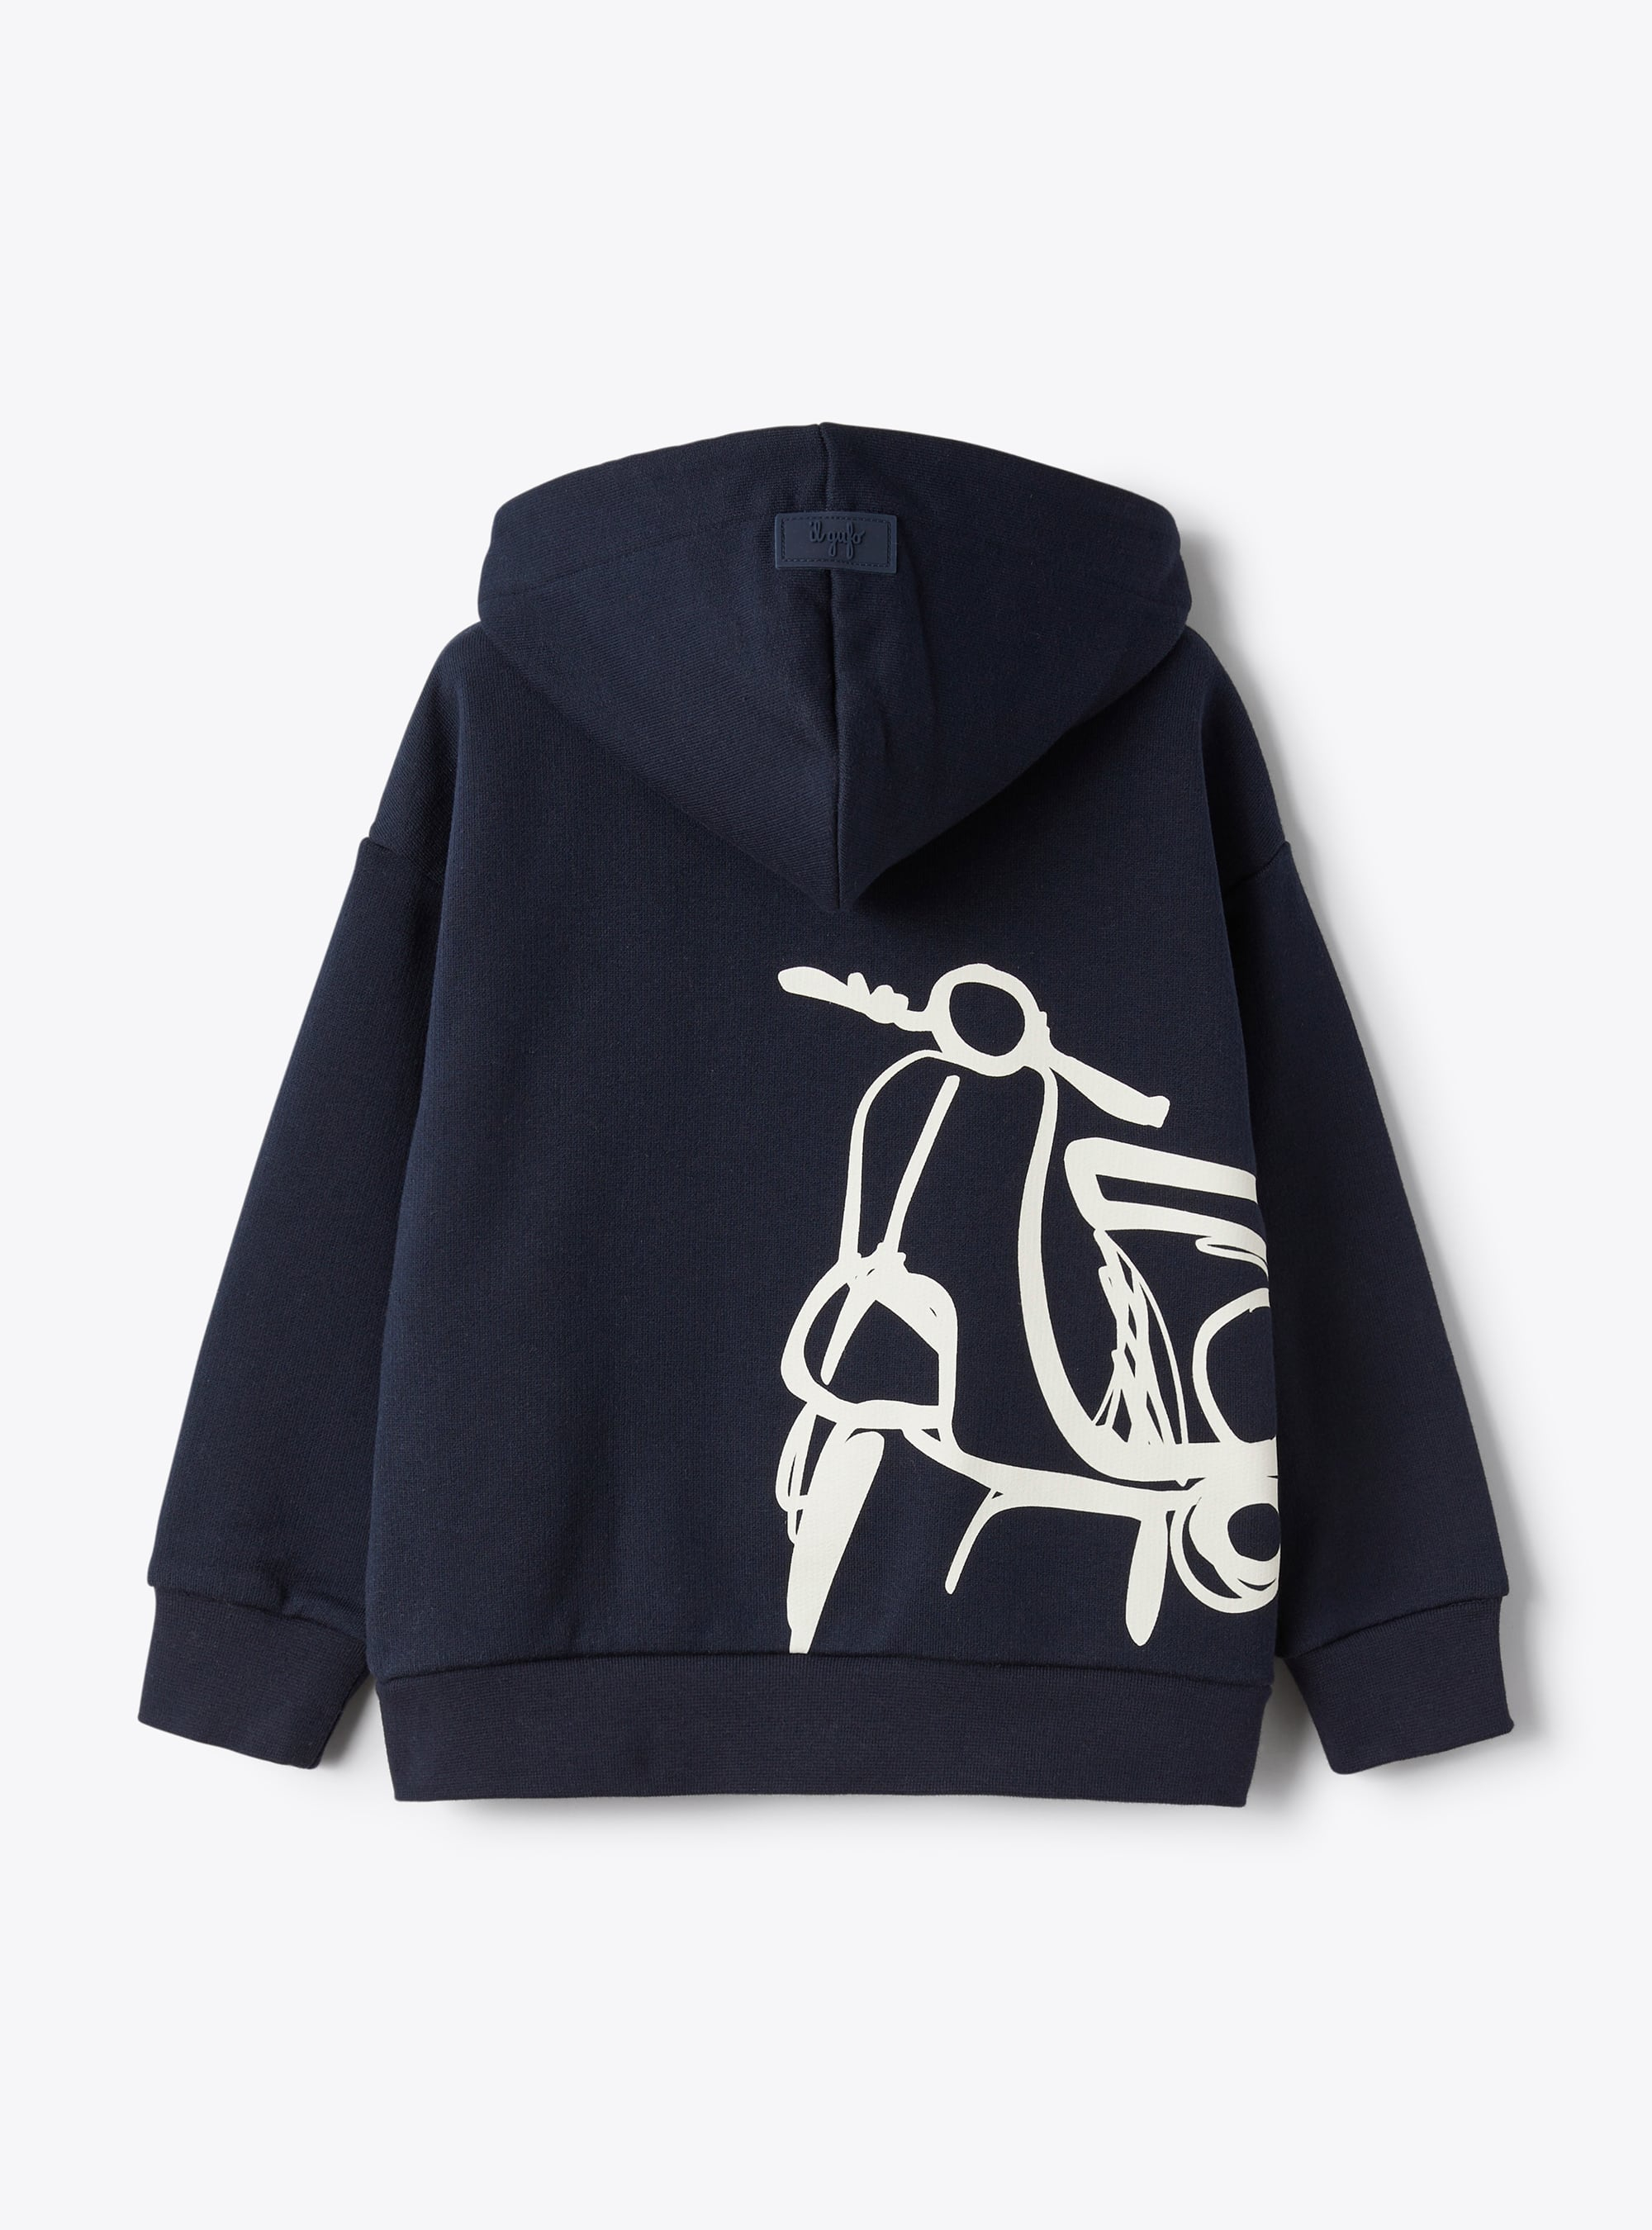 Синяя куртка-толстовка на молнии, с принтом «Скутер Vespa» - СИНИЙ | Il Gufo